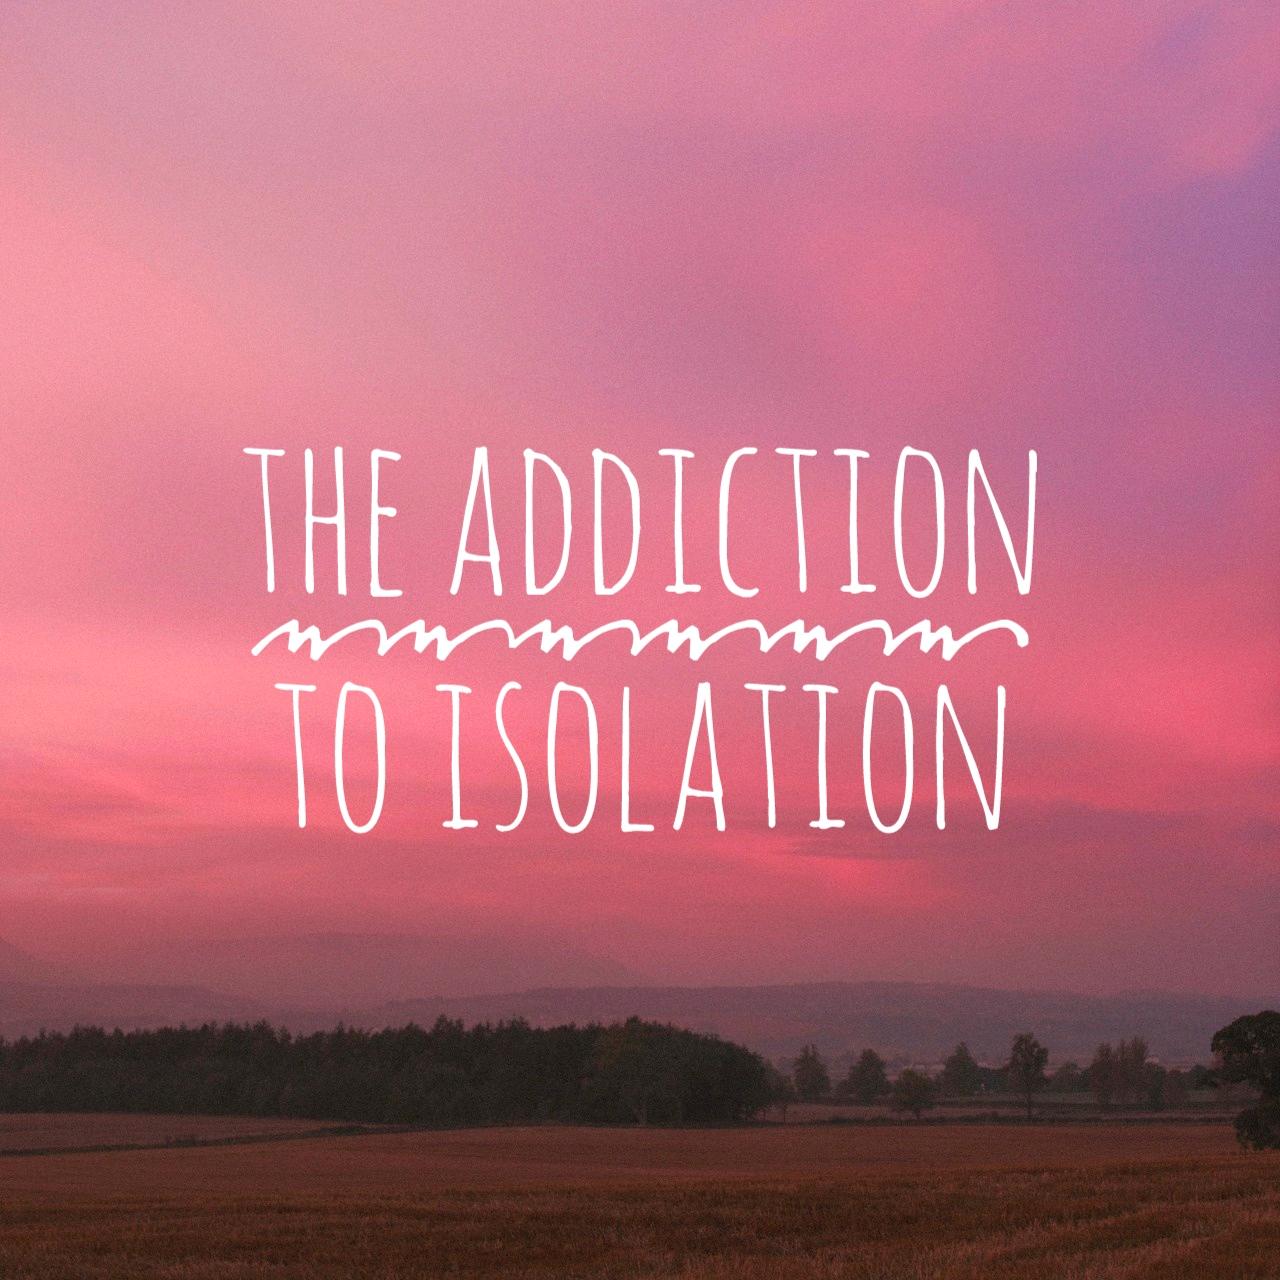 The Addiction to Isolation